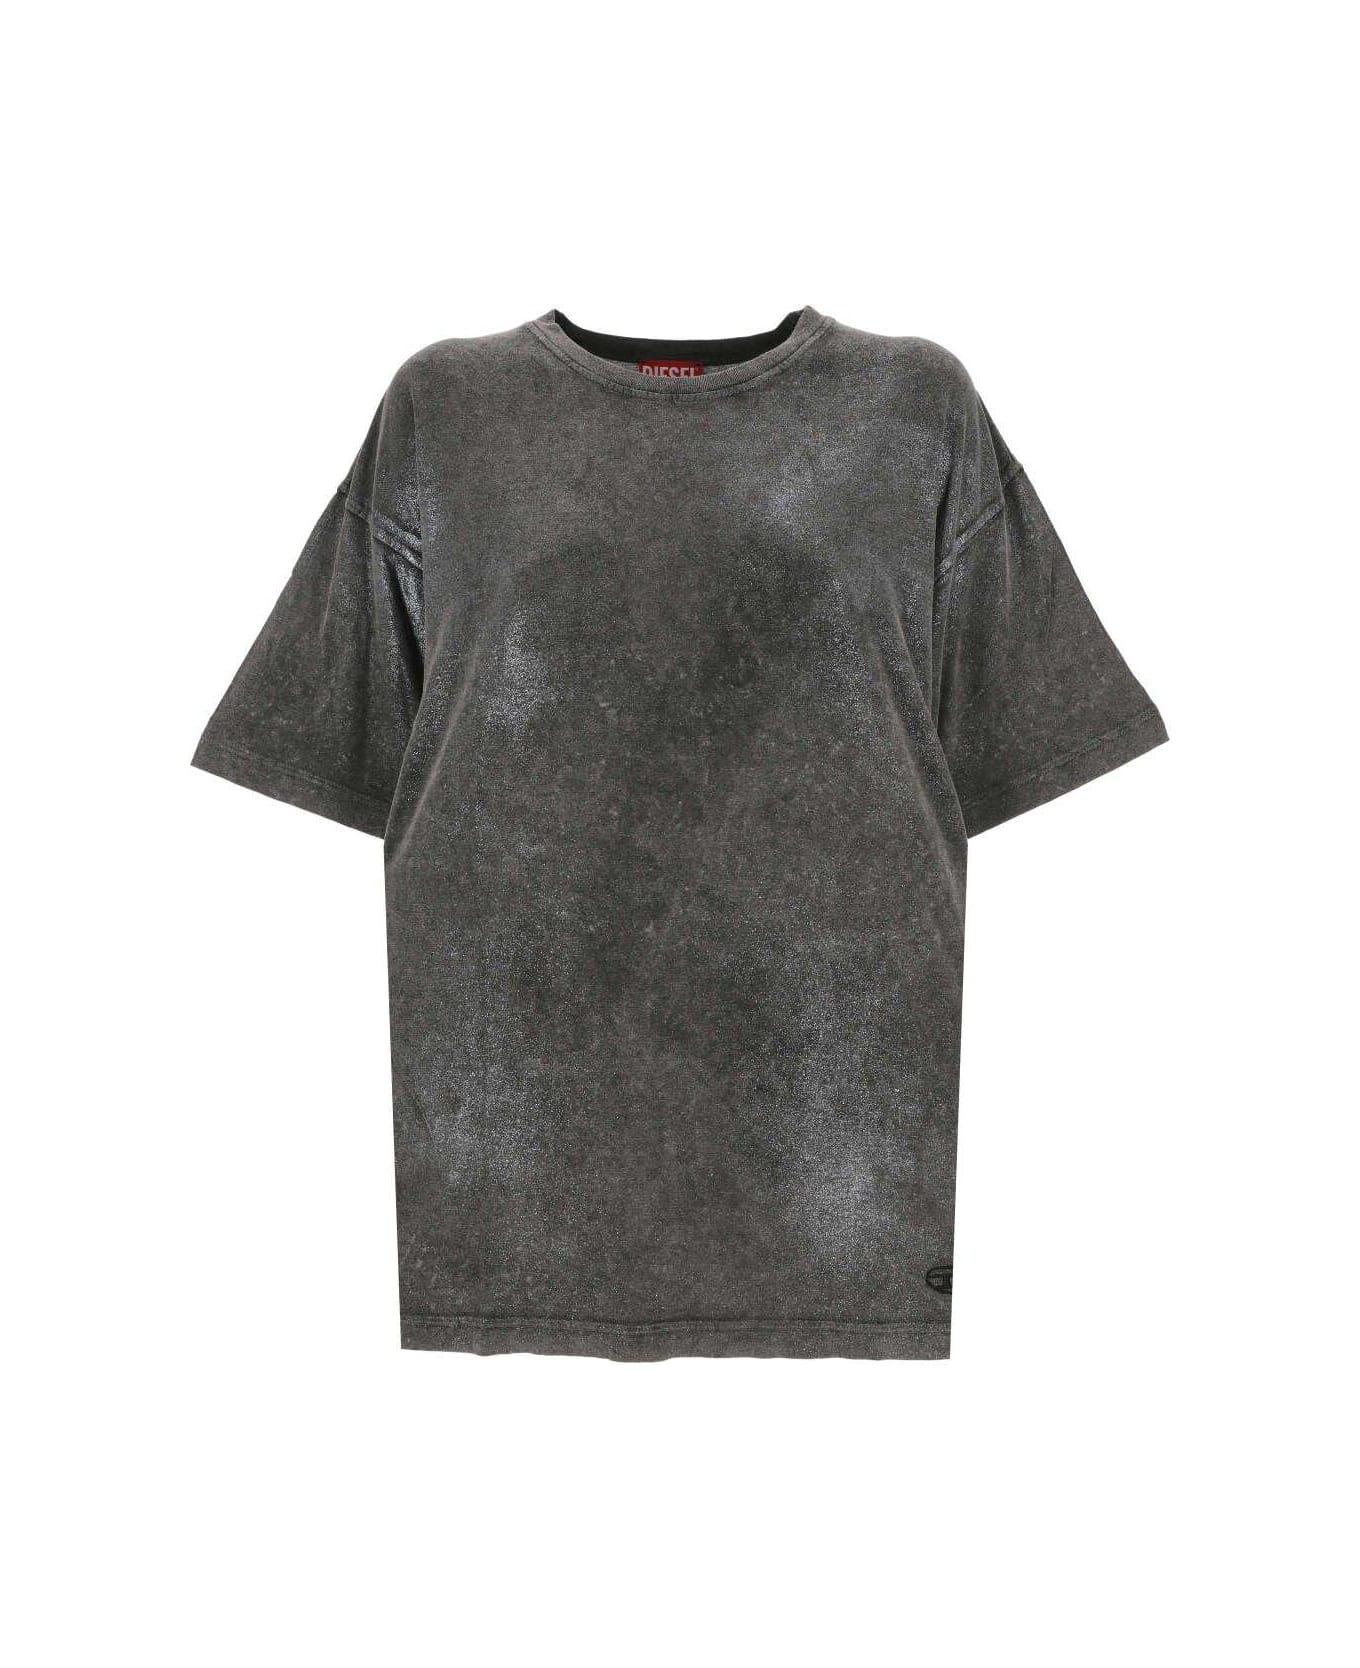 Diesel T-buxt Faded Metallic T-shirt - Non definito